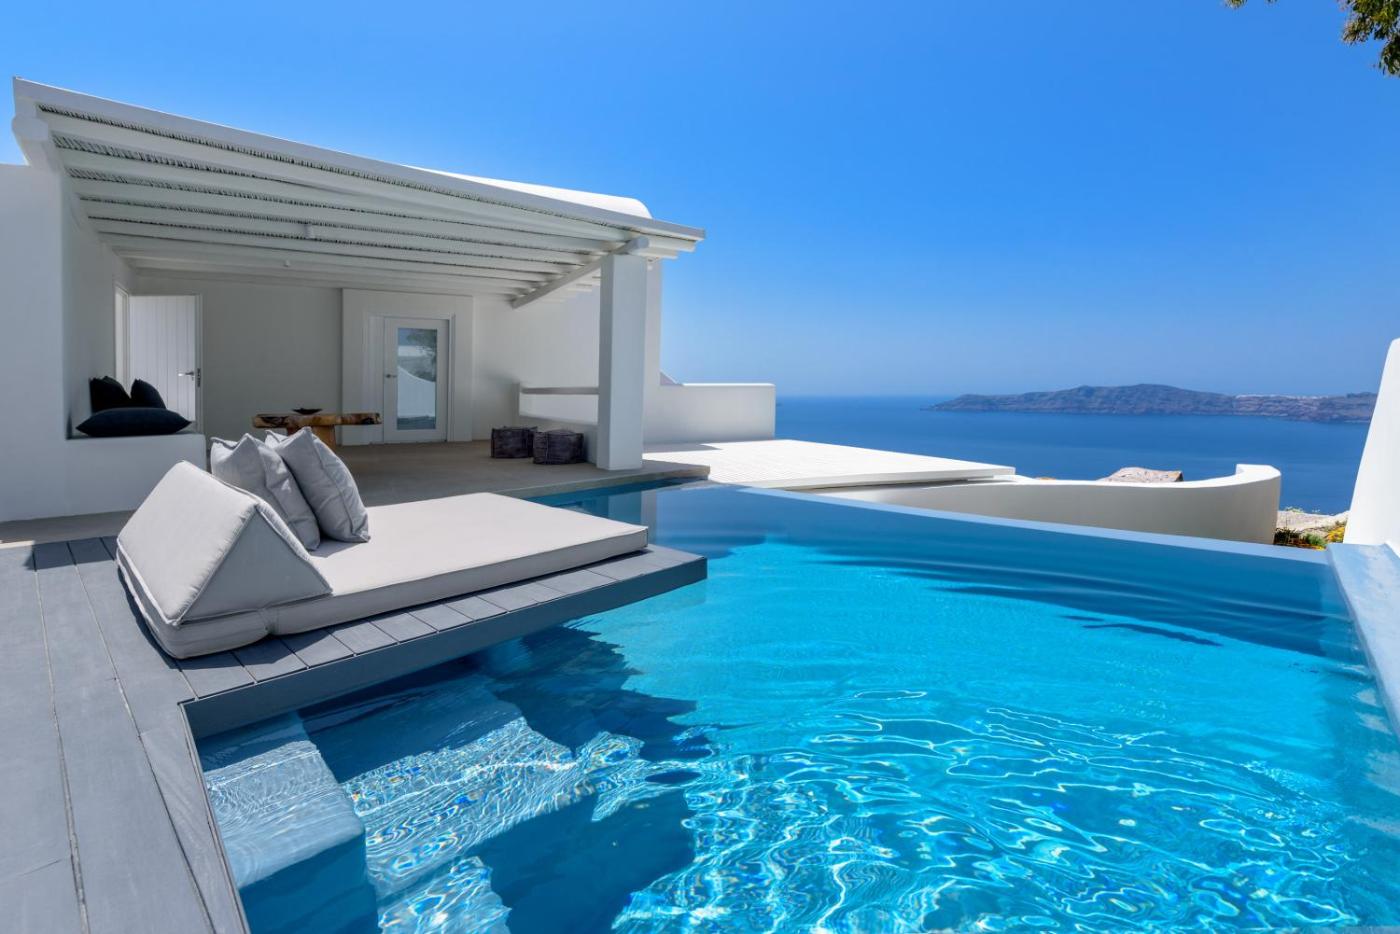 Hotel with private pool - Cavo Tagoo Santorini